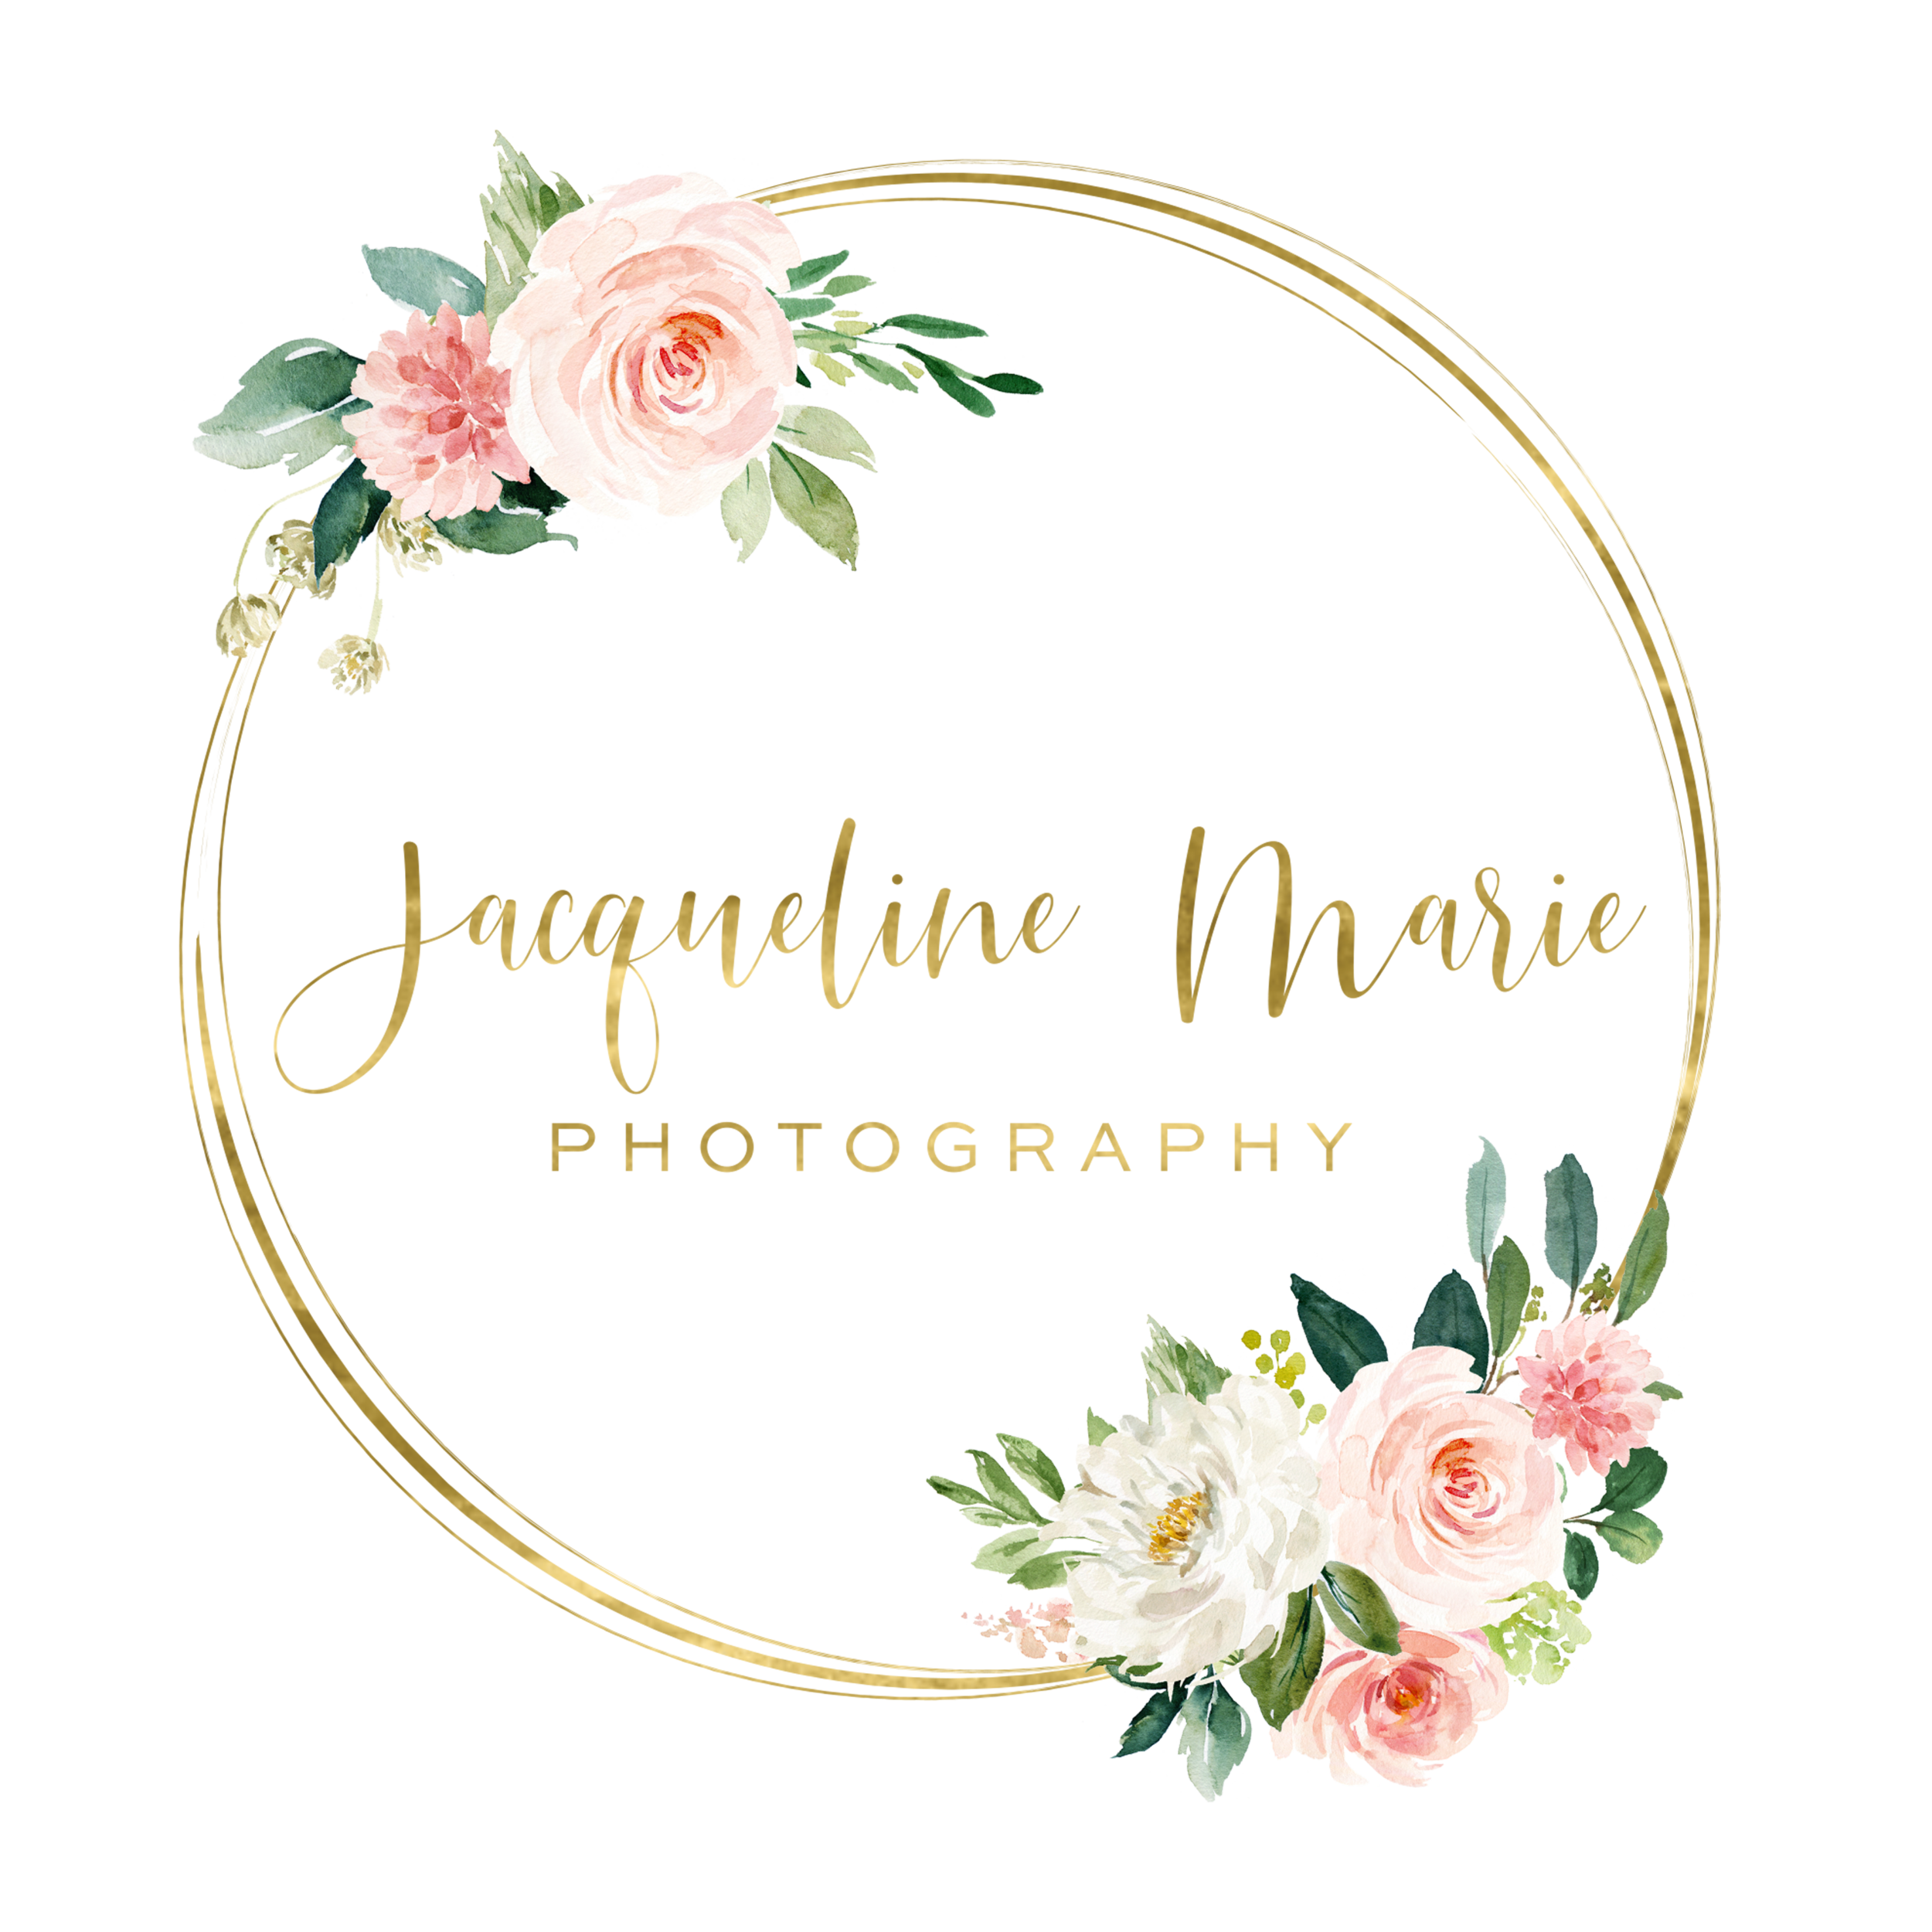 Jacqueline Marie Photography: Columbus Ohio Maternity, Newborn, Baby Photographer